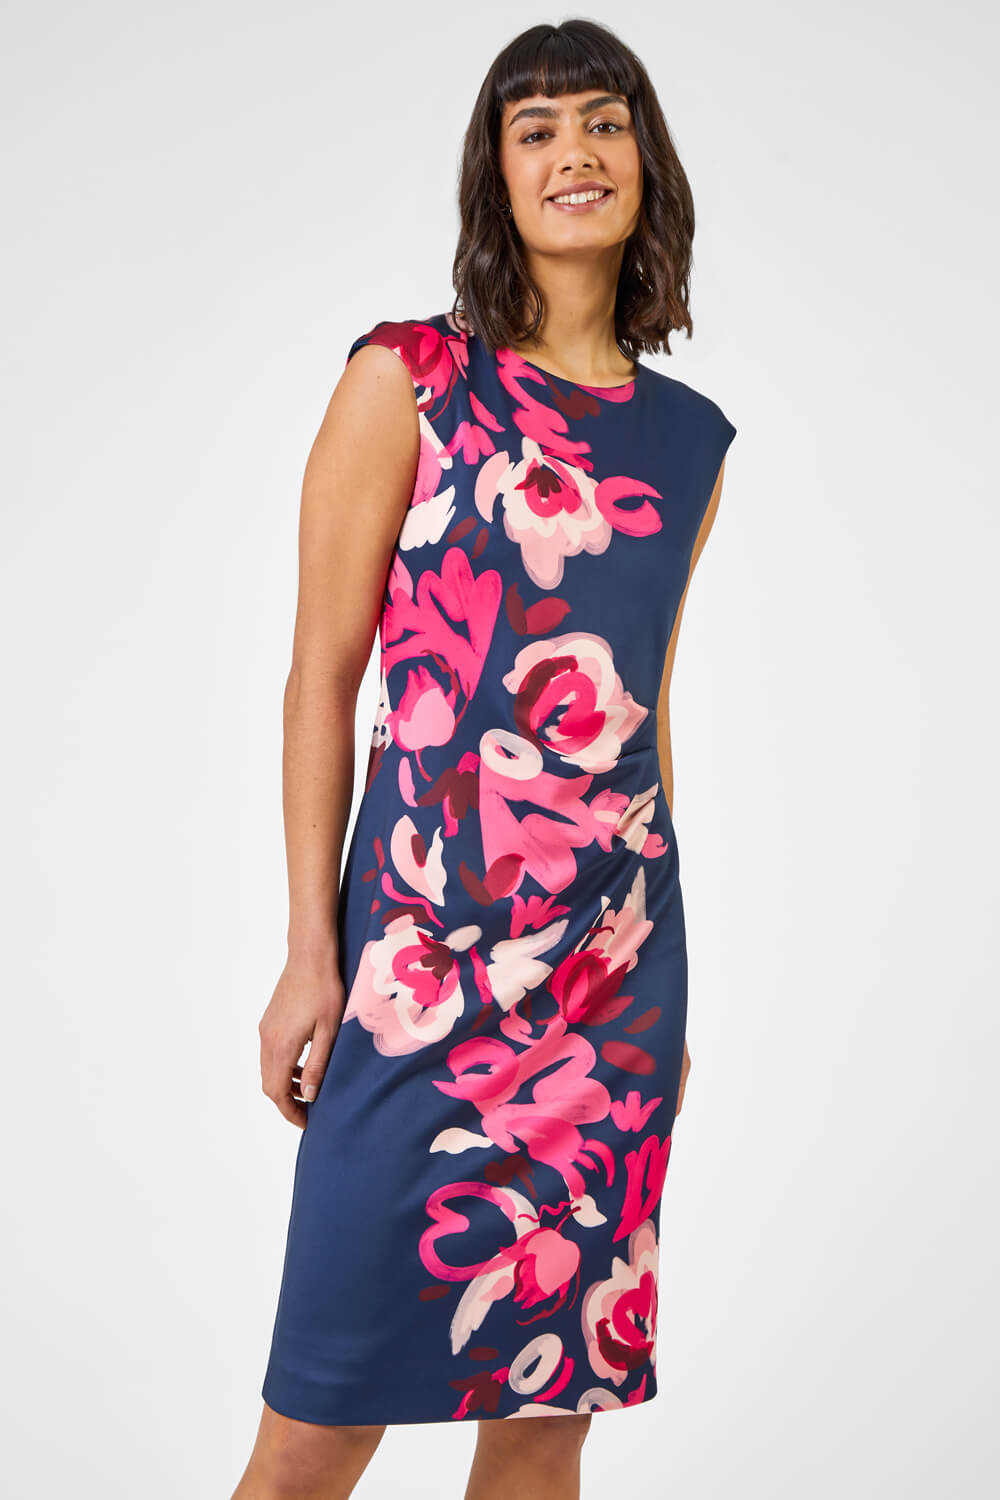 Floral Print Fitted Premium Stretch Dress in Navy - Roman Originals UK